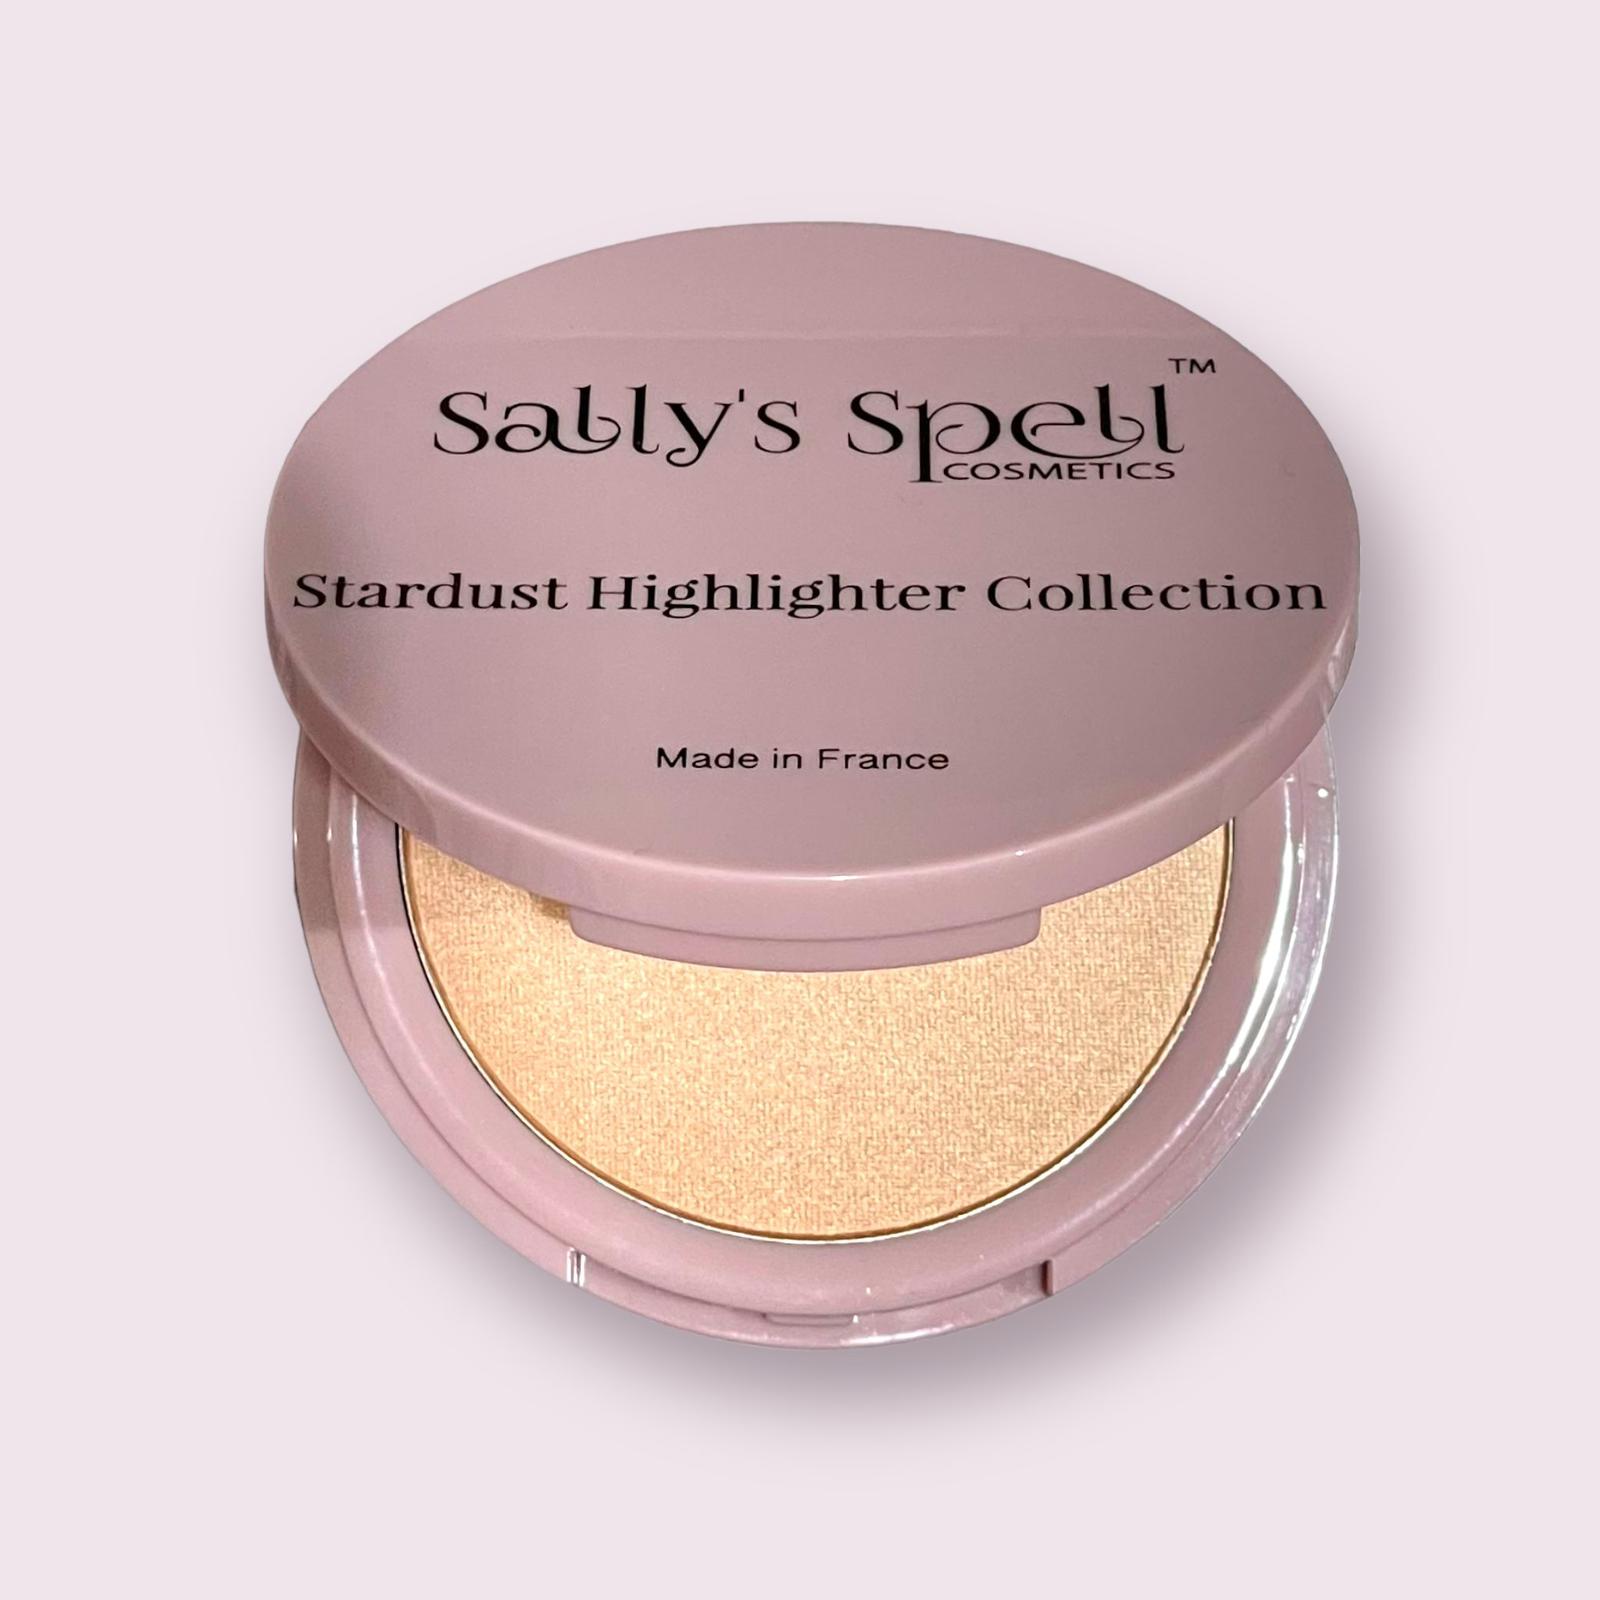 Sally’s Spell Stardust Highlighter (Sartdust)